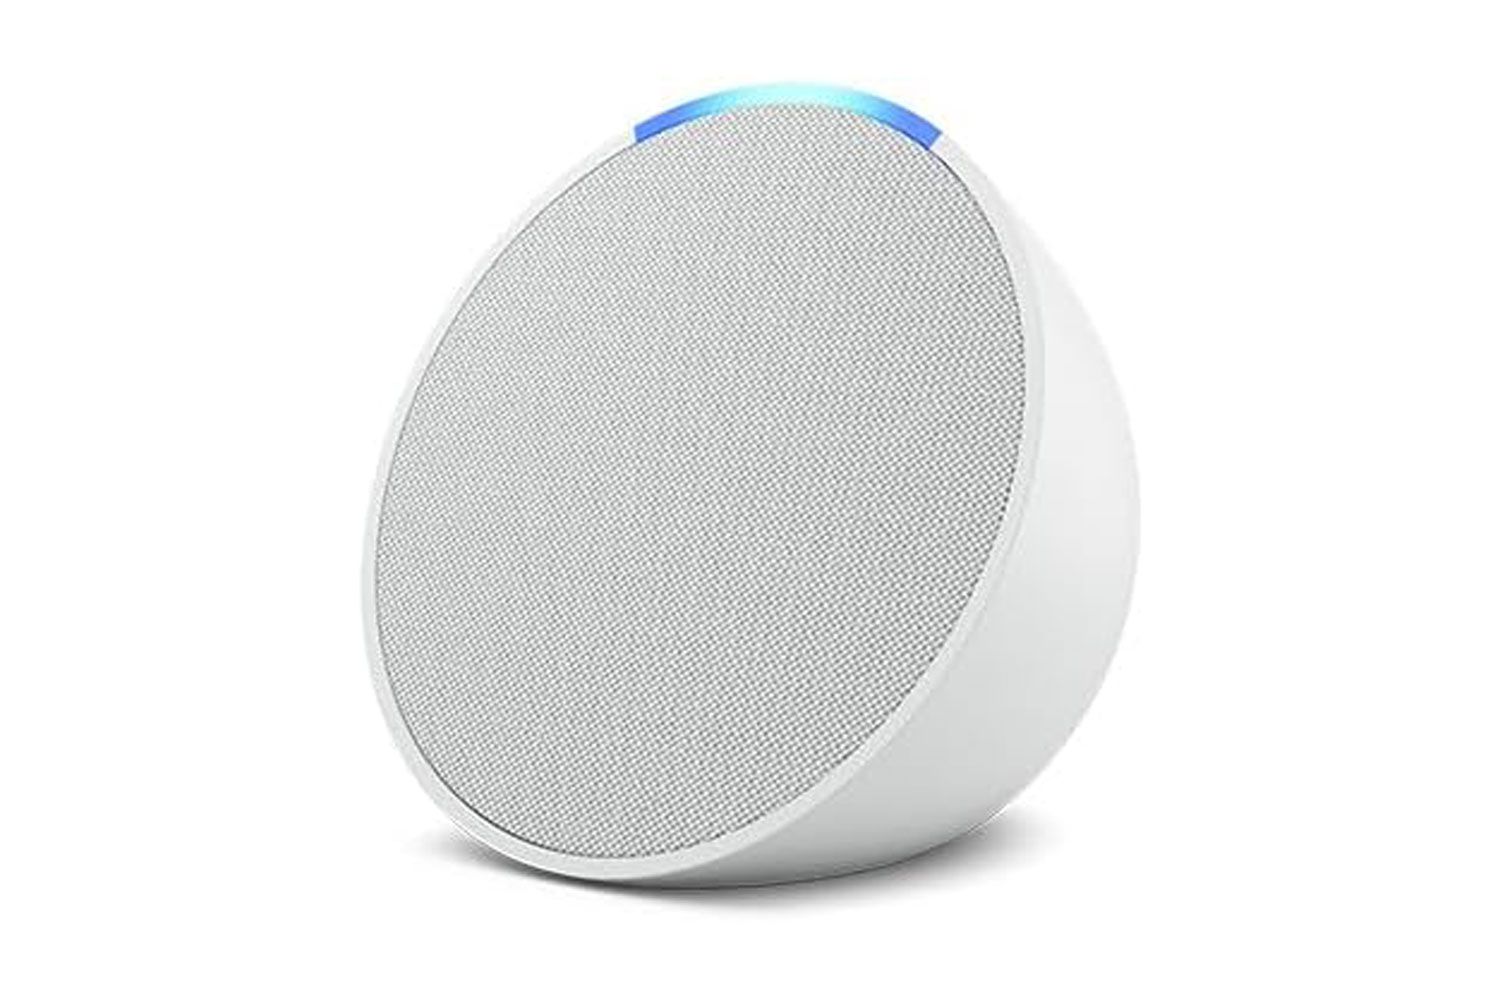 Amazon Introducing Echo Pop | Full sound compact smart speaker with Alexa